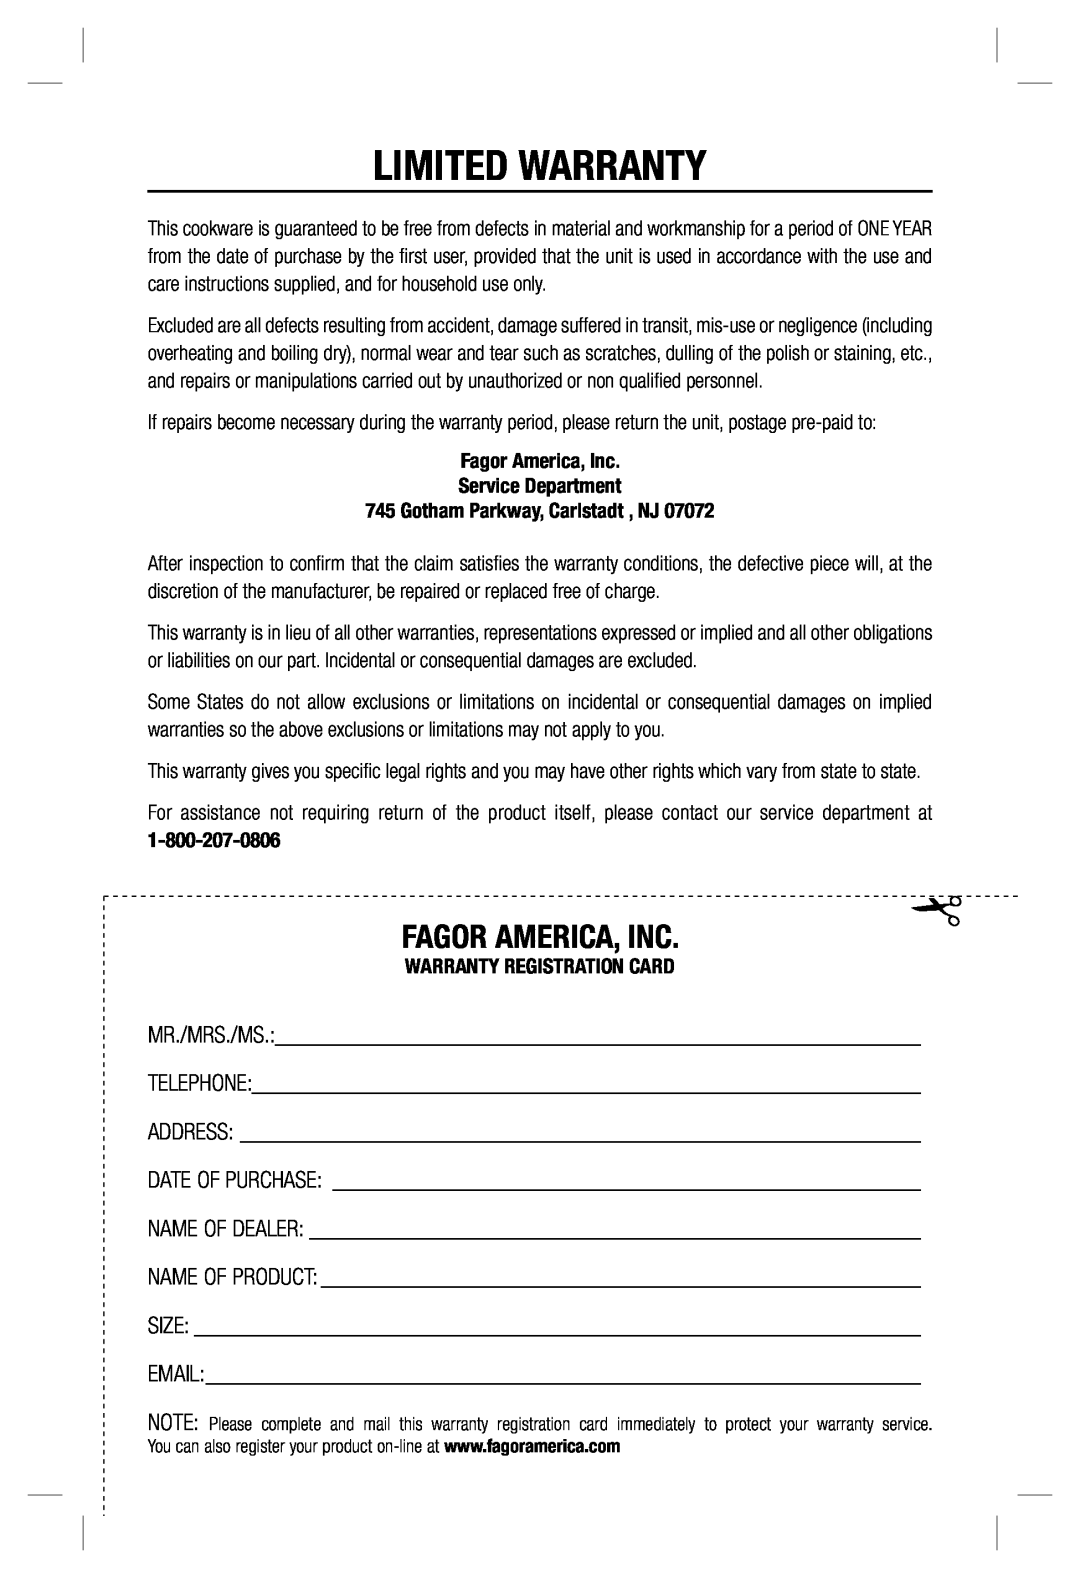 Fagor America Cast Aluminum Cookware user manual Limited Warranty, Fagor America, Inc 